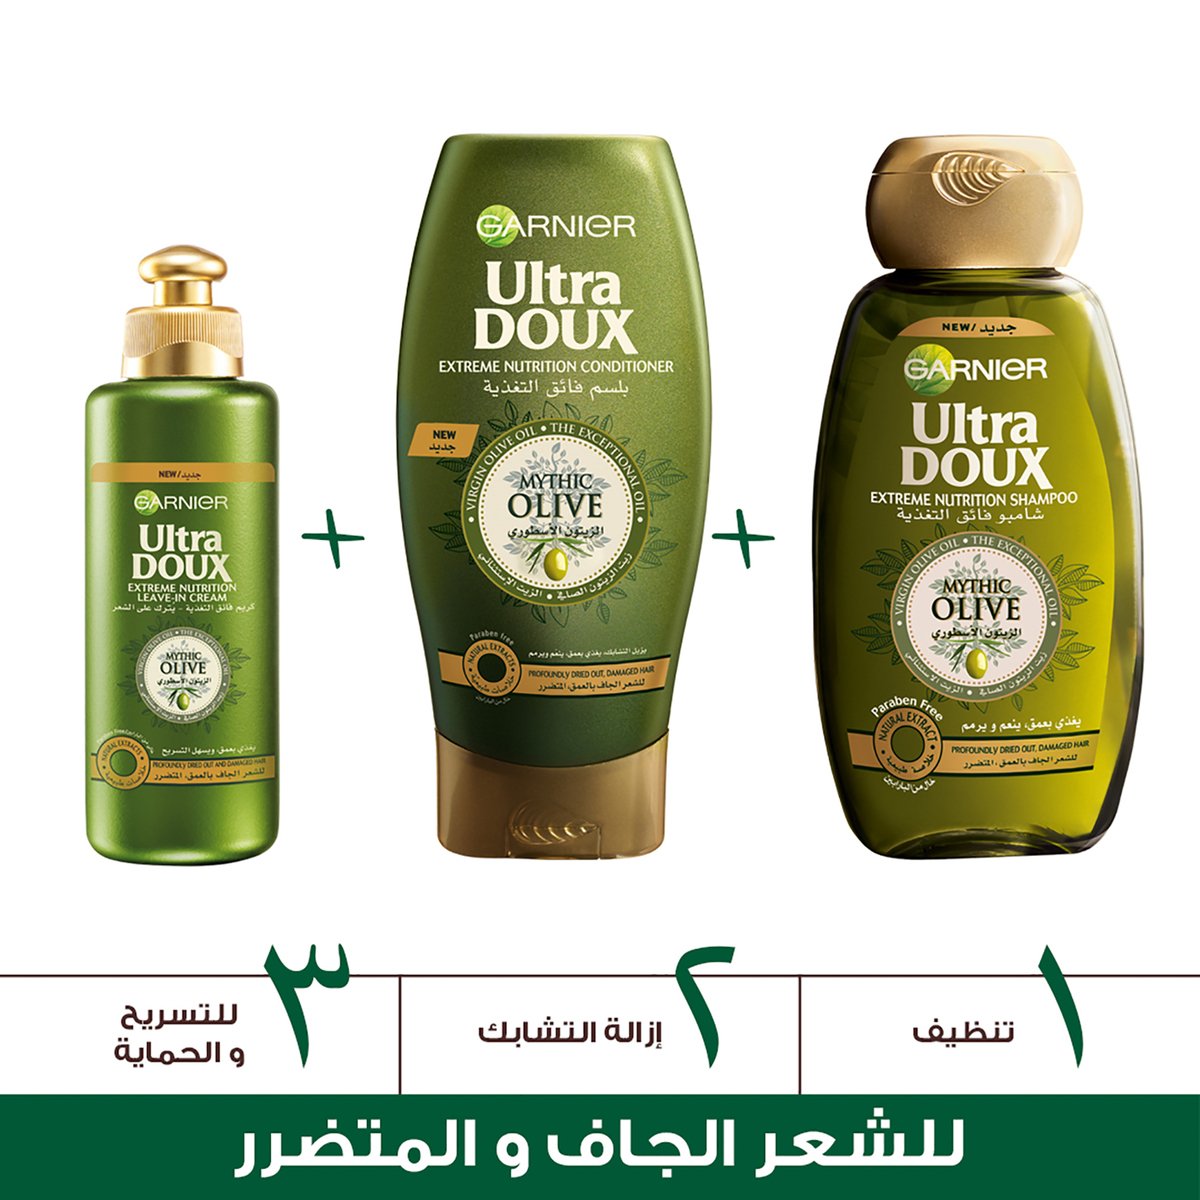 Garnier Ultra Doux Mythic Olive Extreme Nutrition Shampoo 200 ml